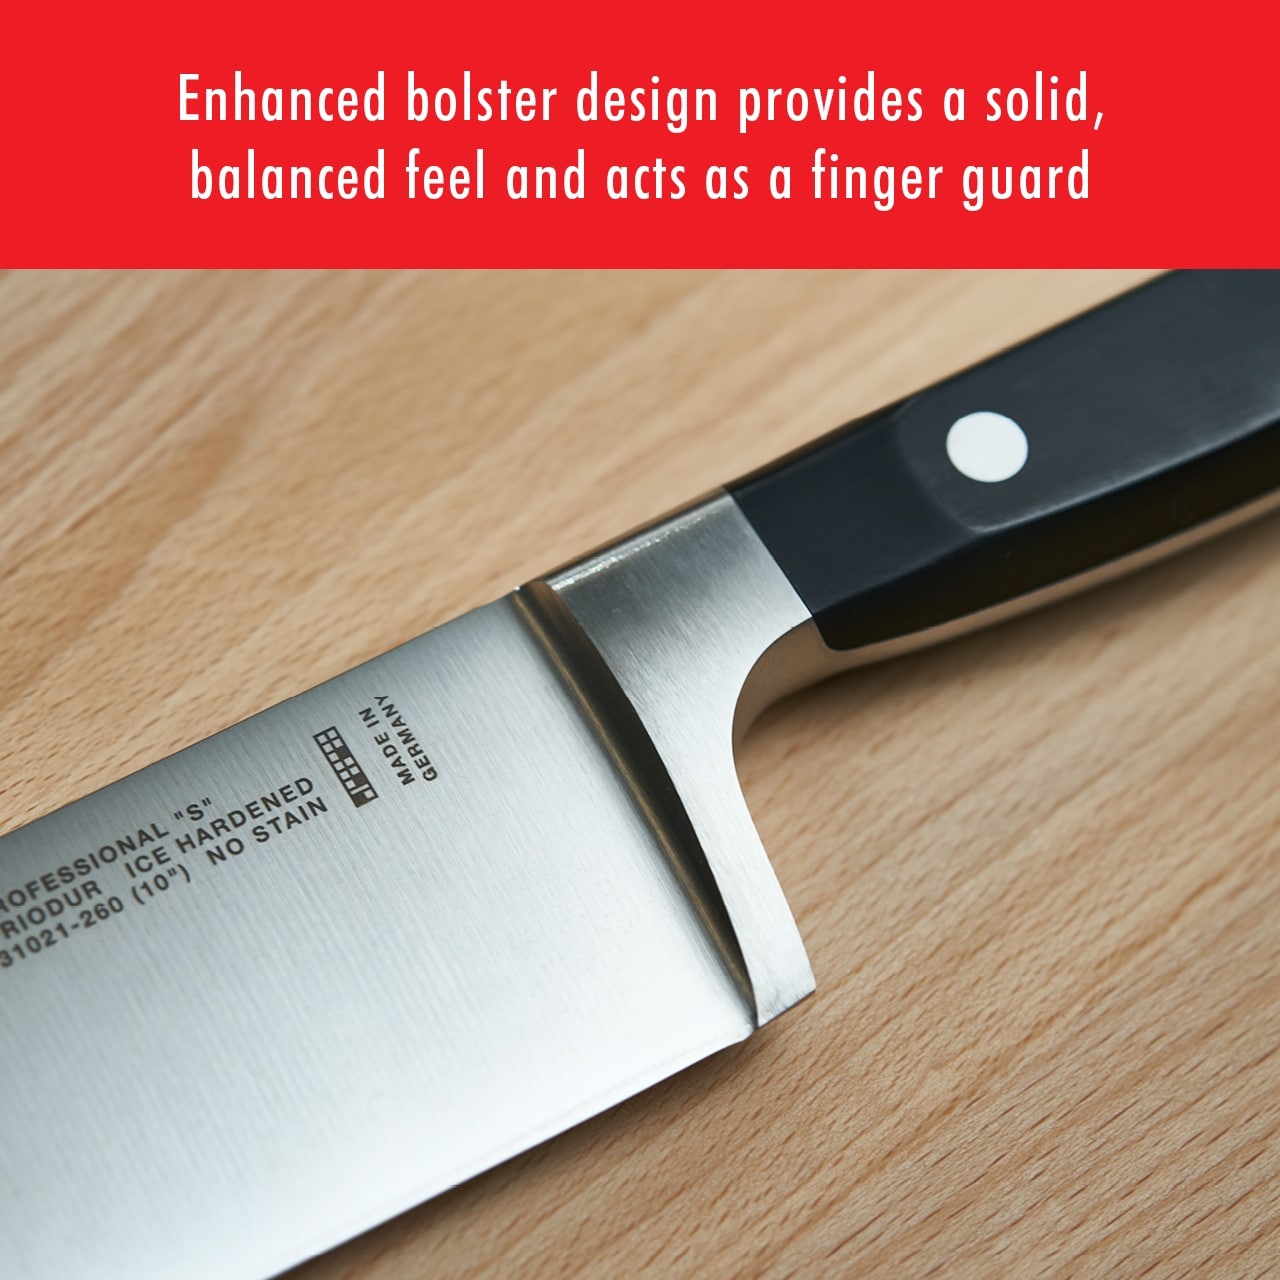 Buy ZWILLING Professional S Knife block set